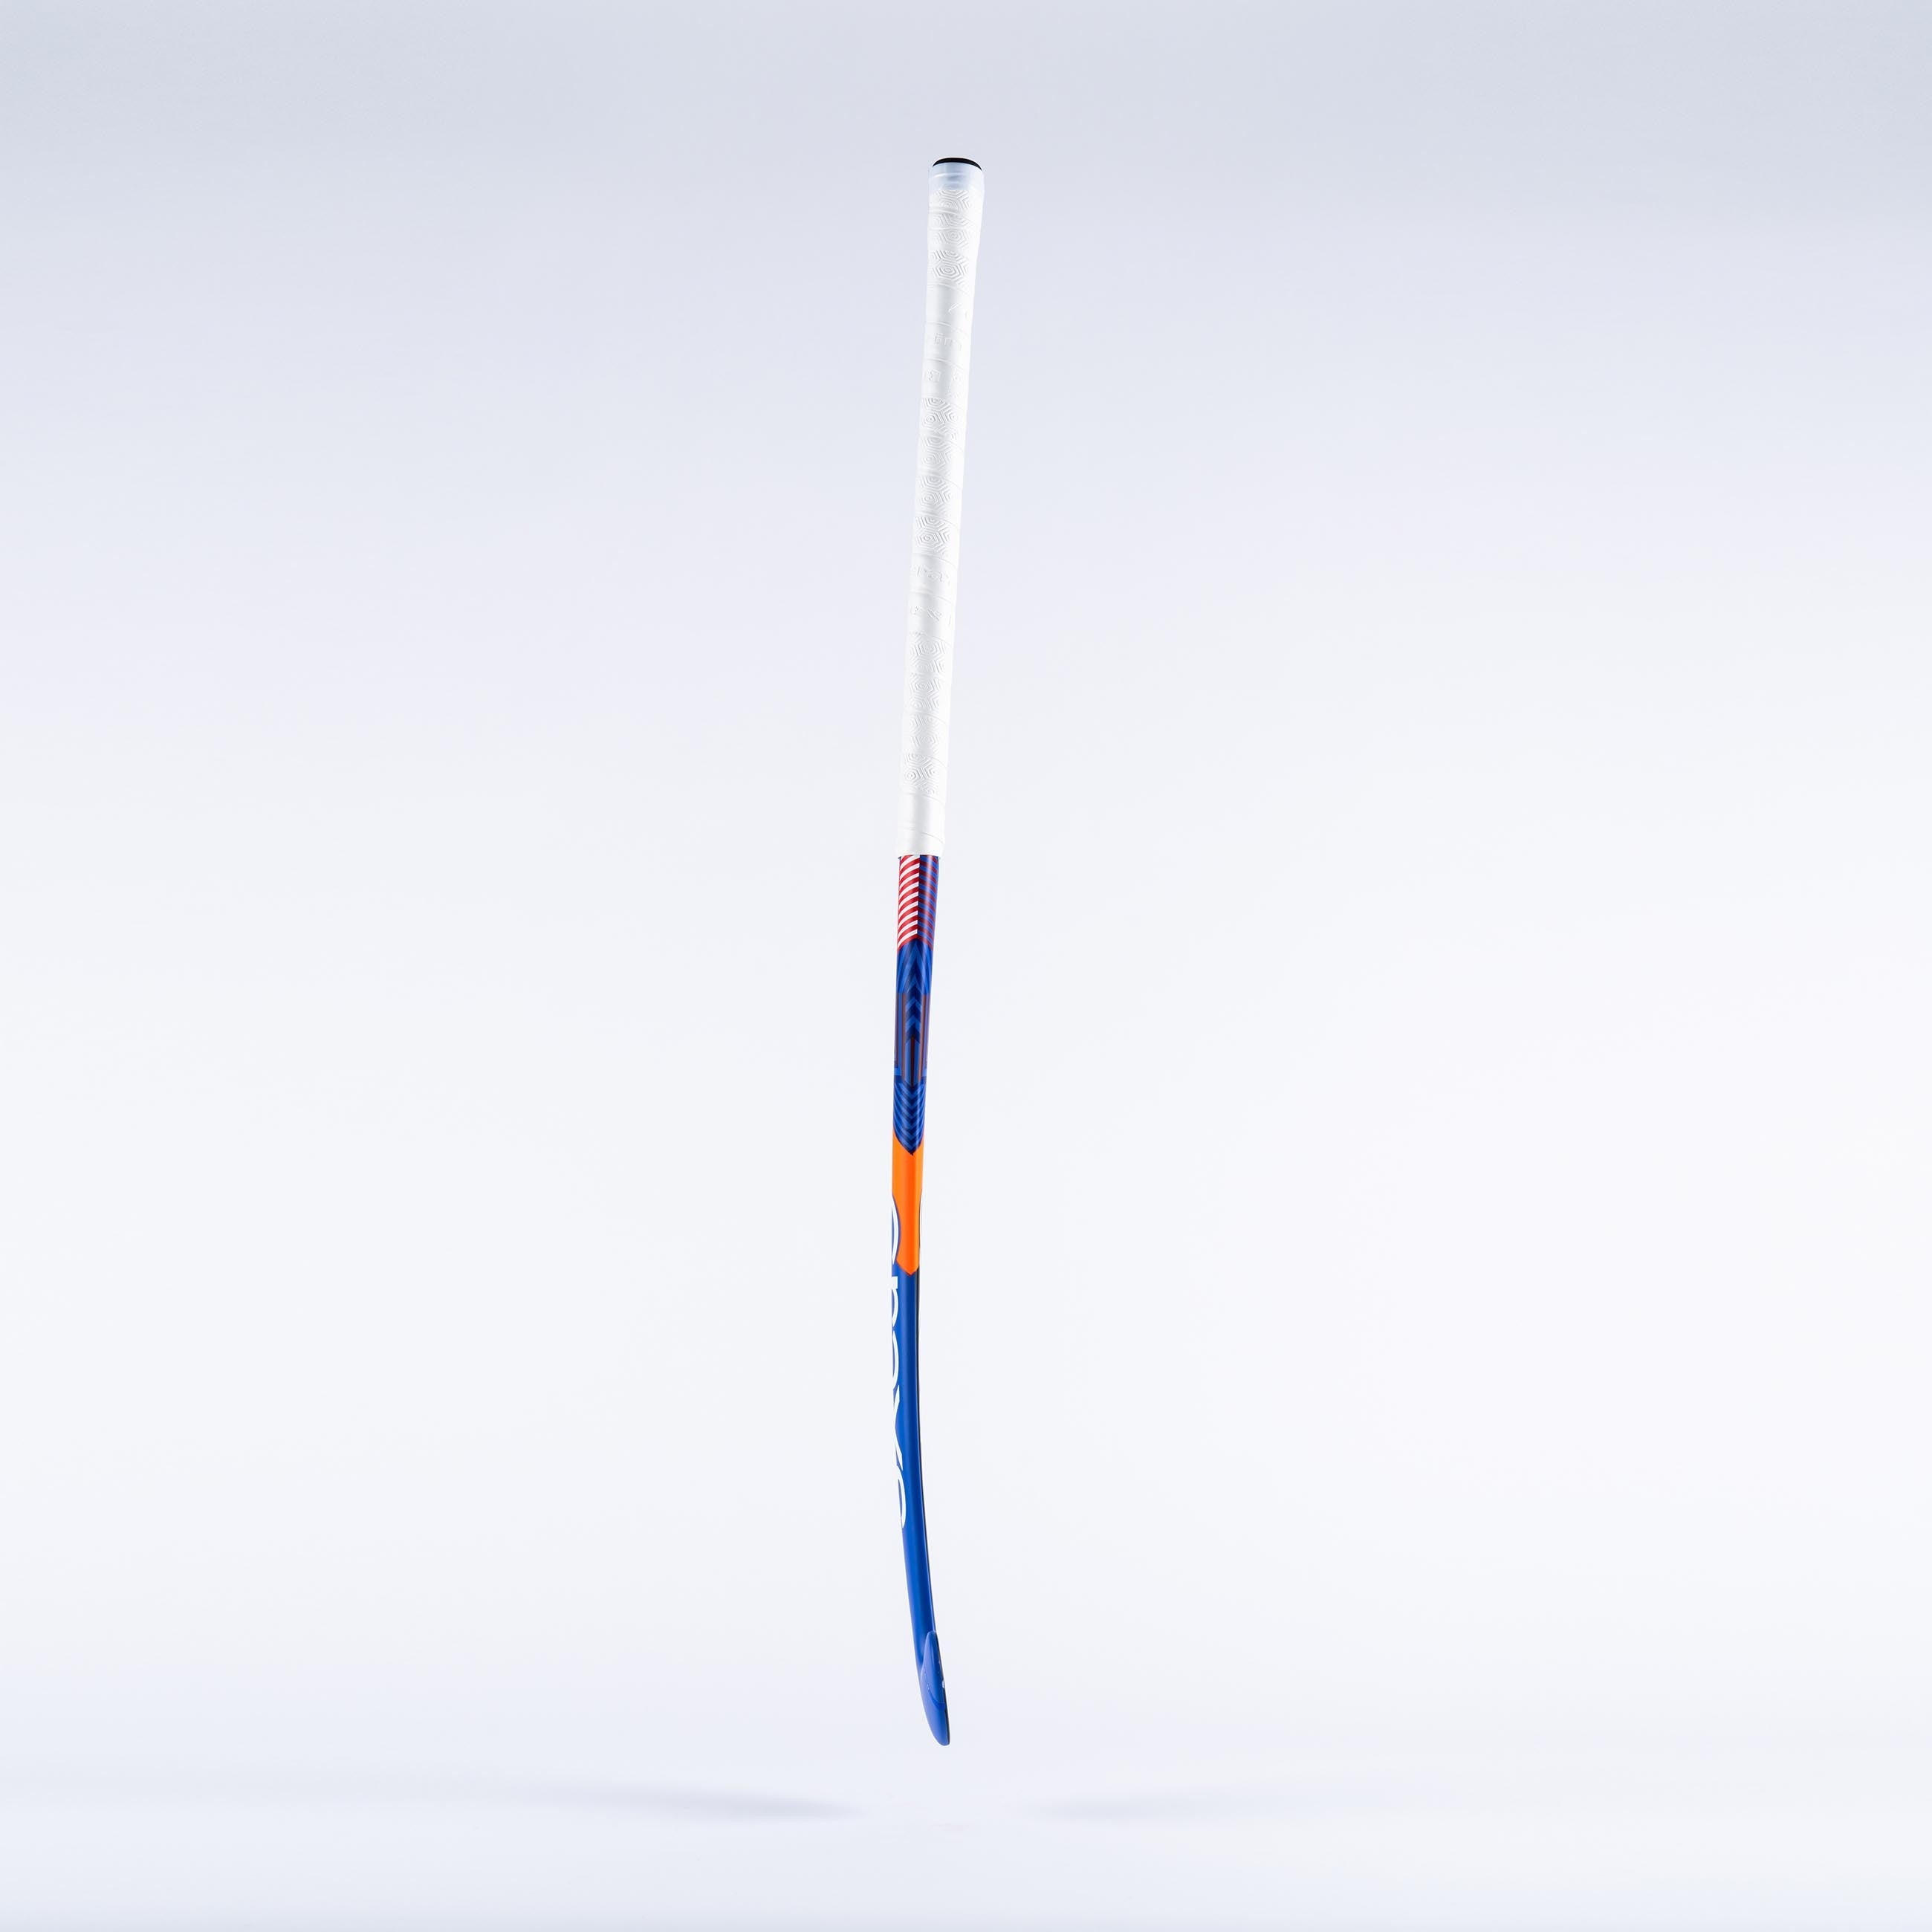 GTi4000 Dynabow composite indoor hockeystick